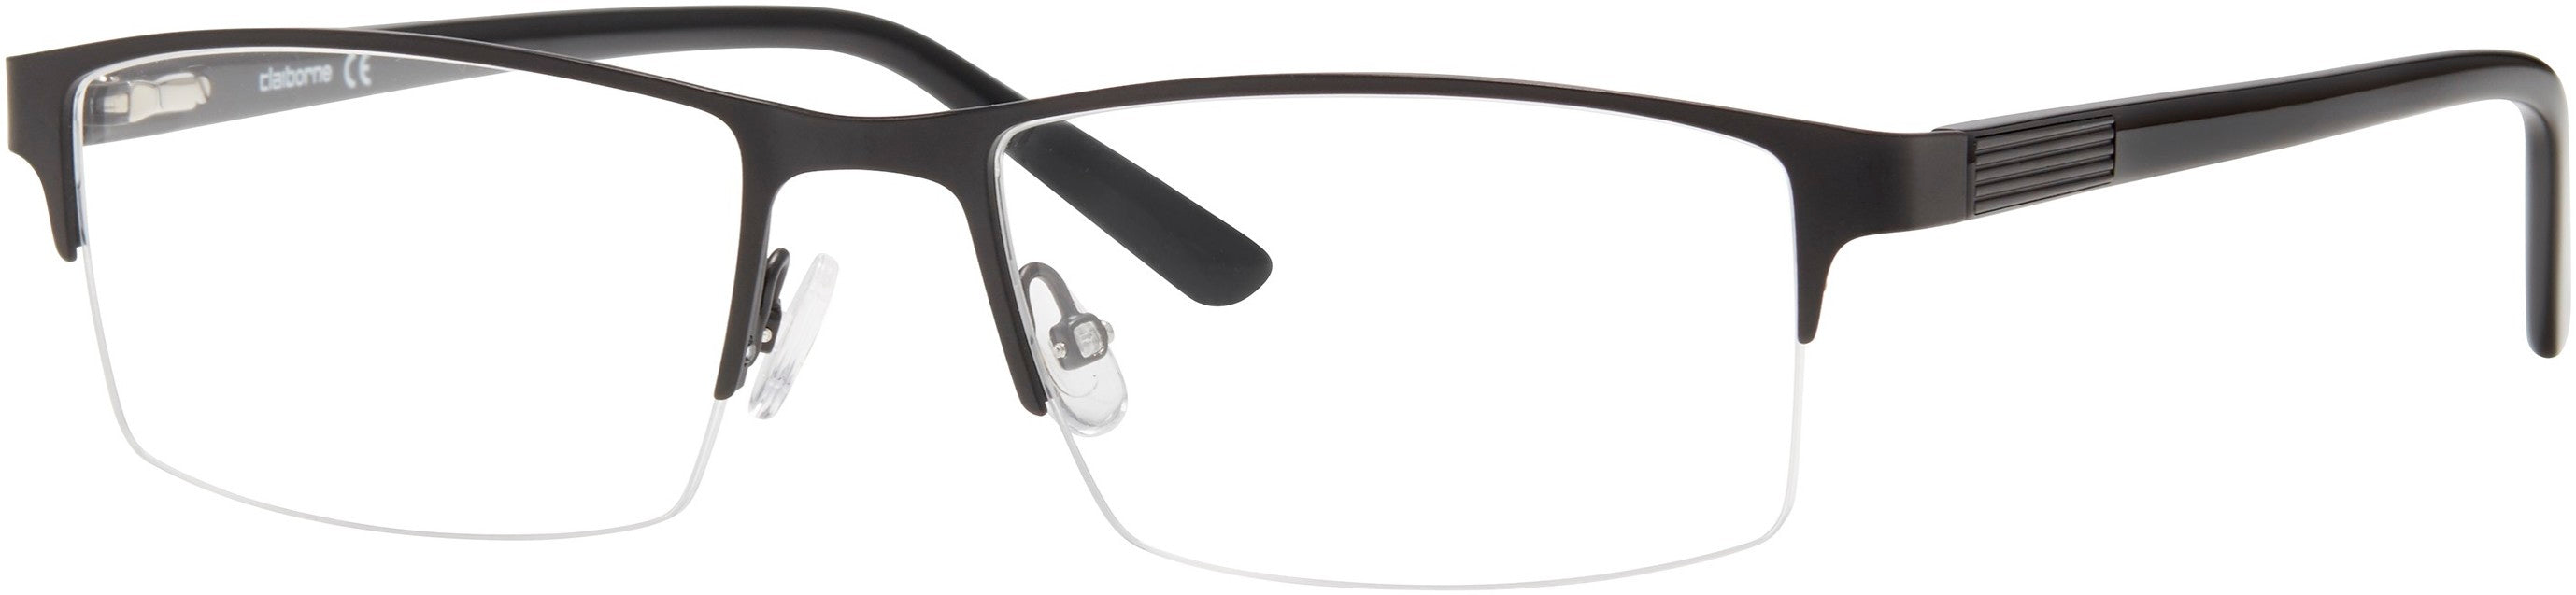  Claiborne 254 Rectangular Eyeglasses 0003-0003  Matte Black (00 Demo Lens)